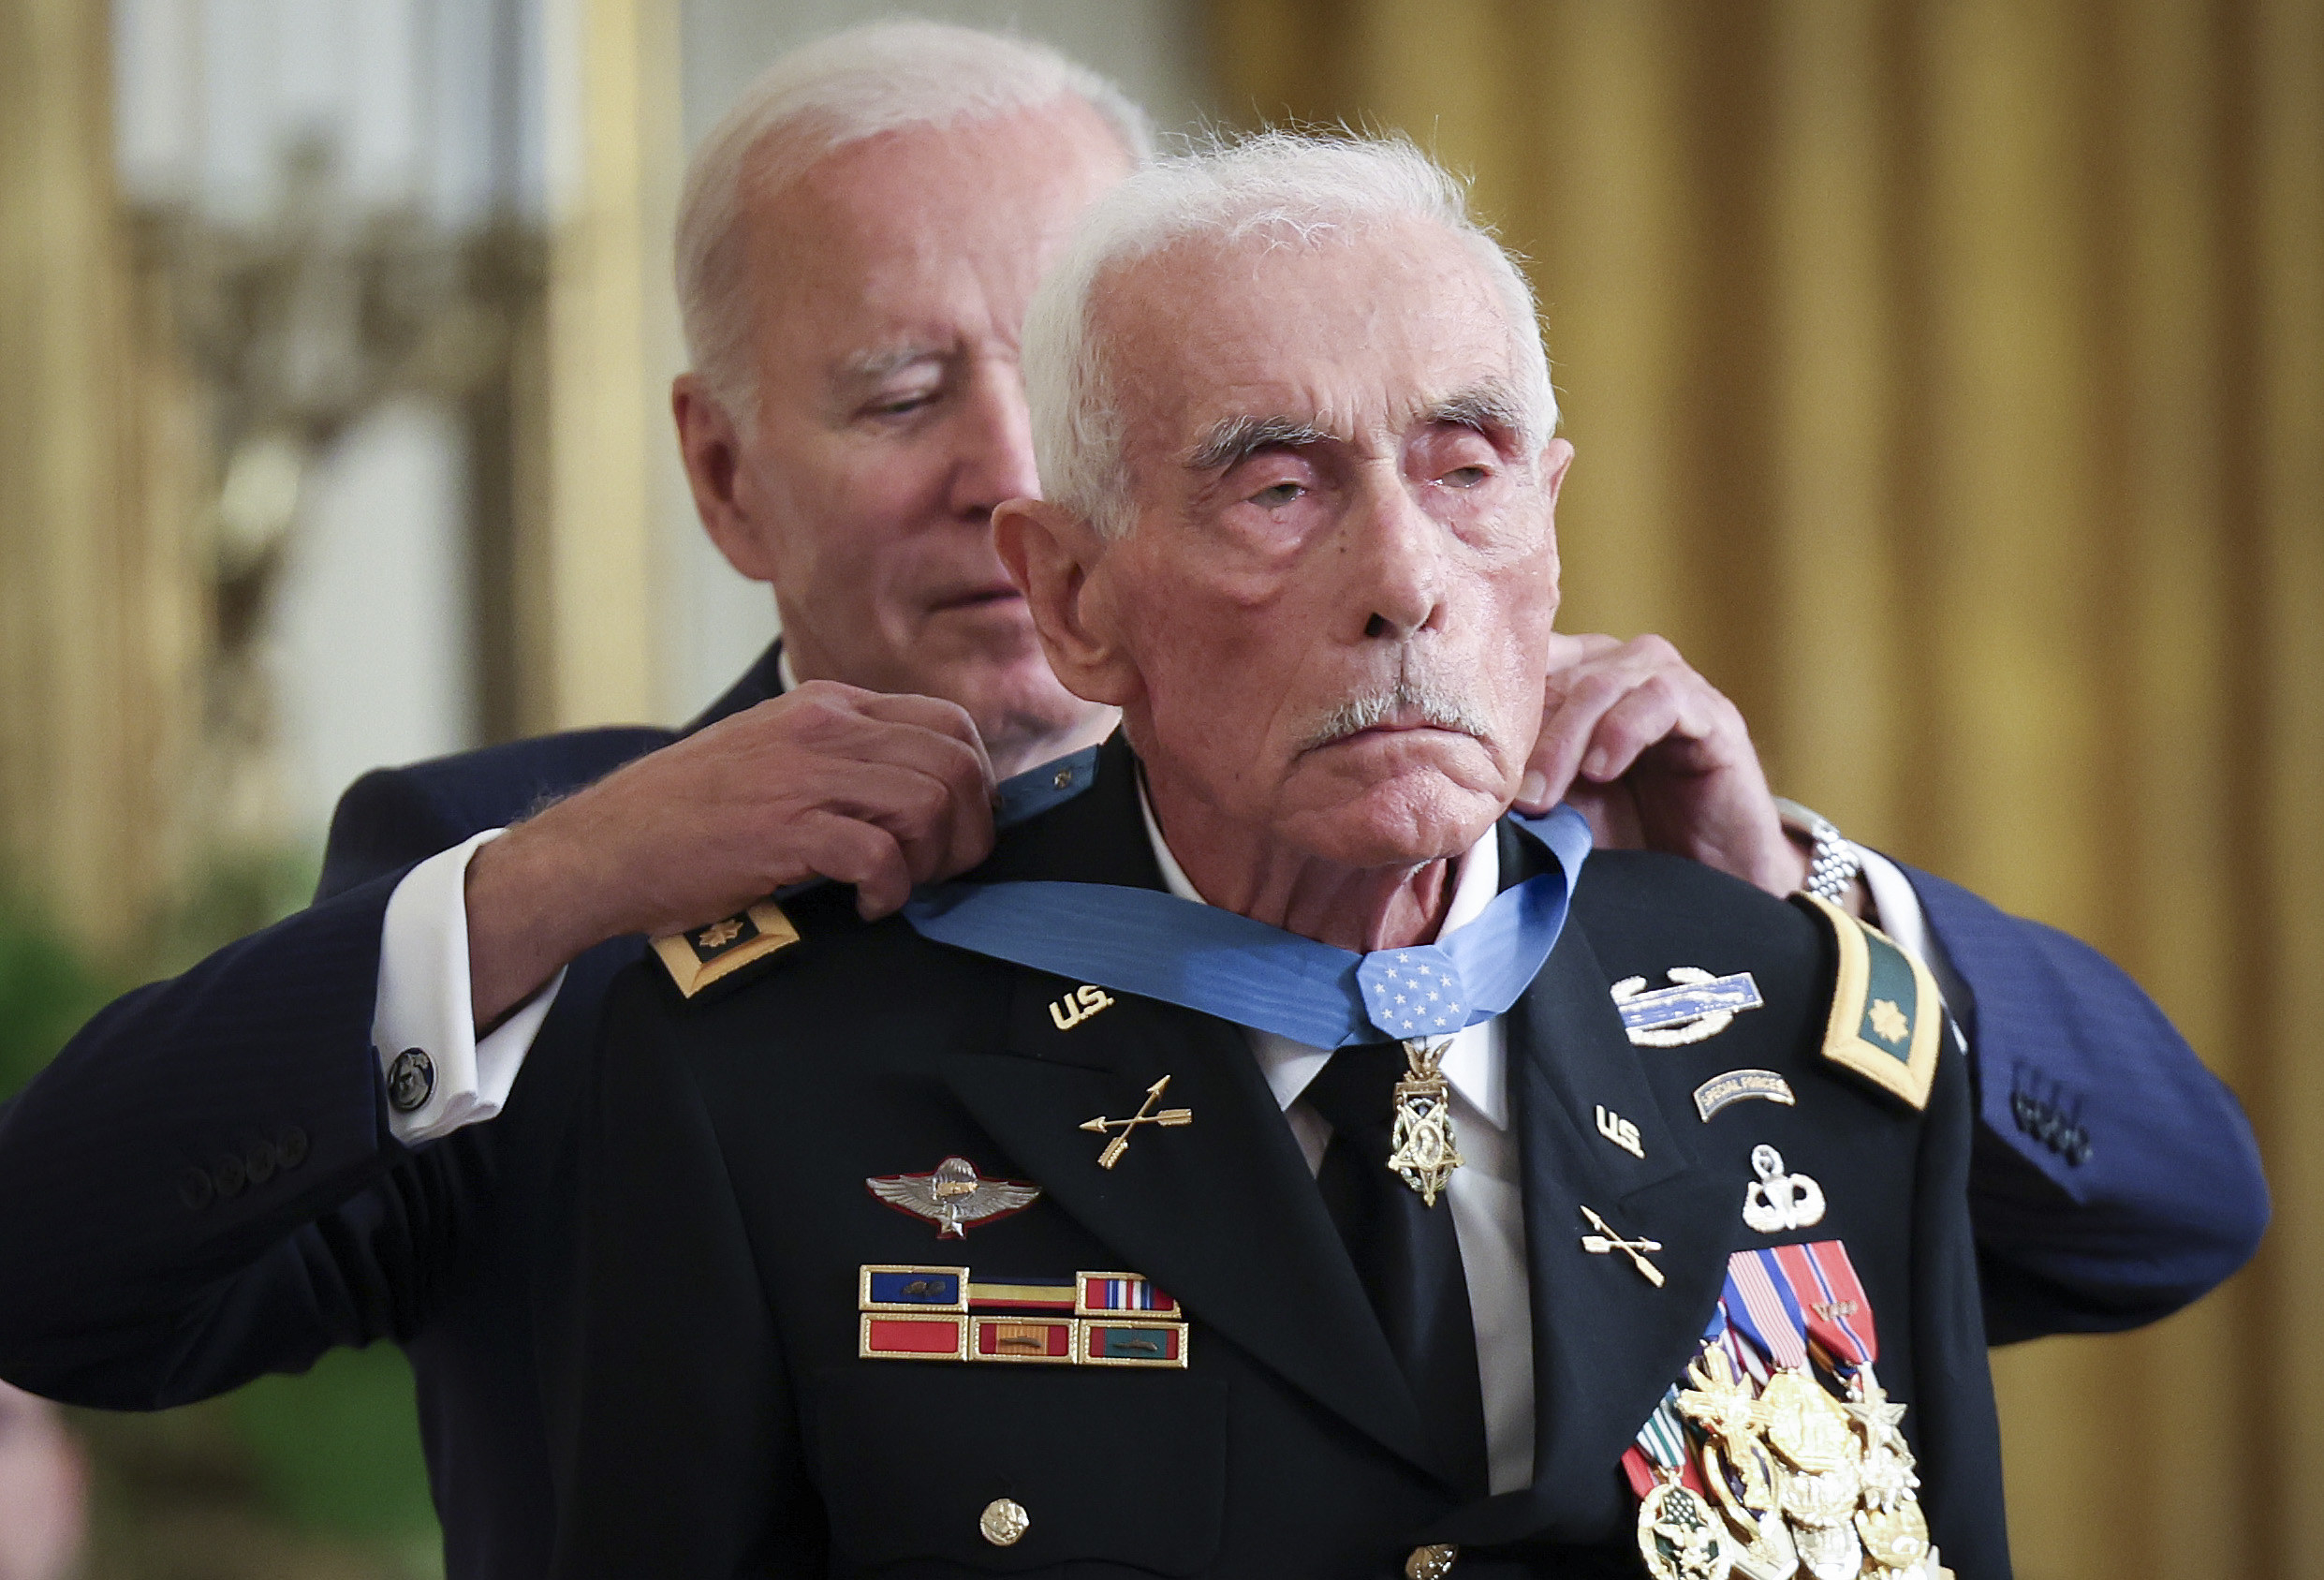 President Joe Biden putting a medal around an older military man&#x27;s neck